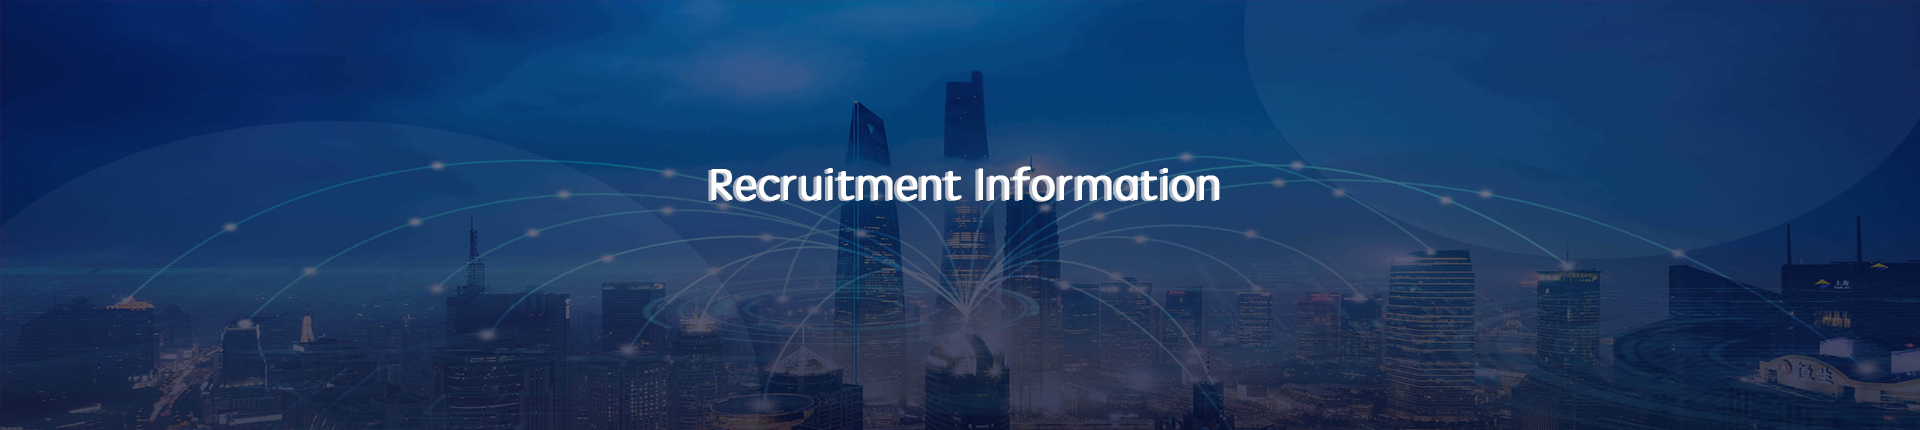 Recruitment Information banner